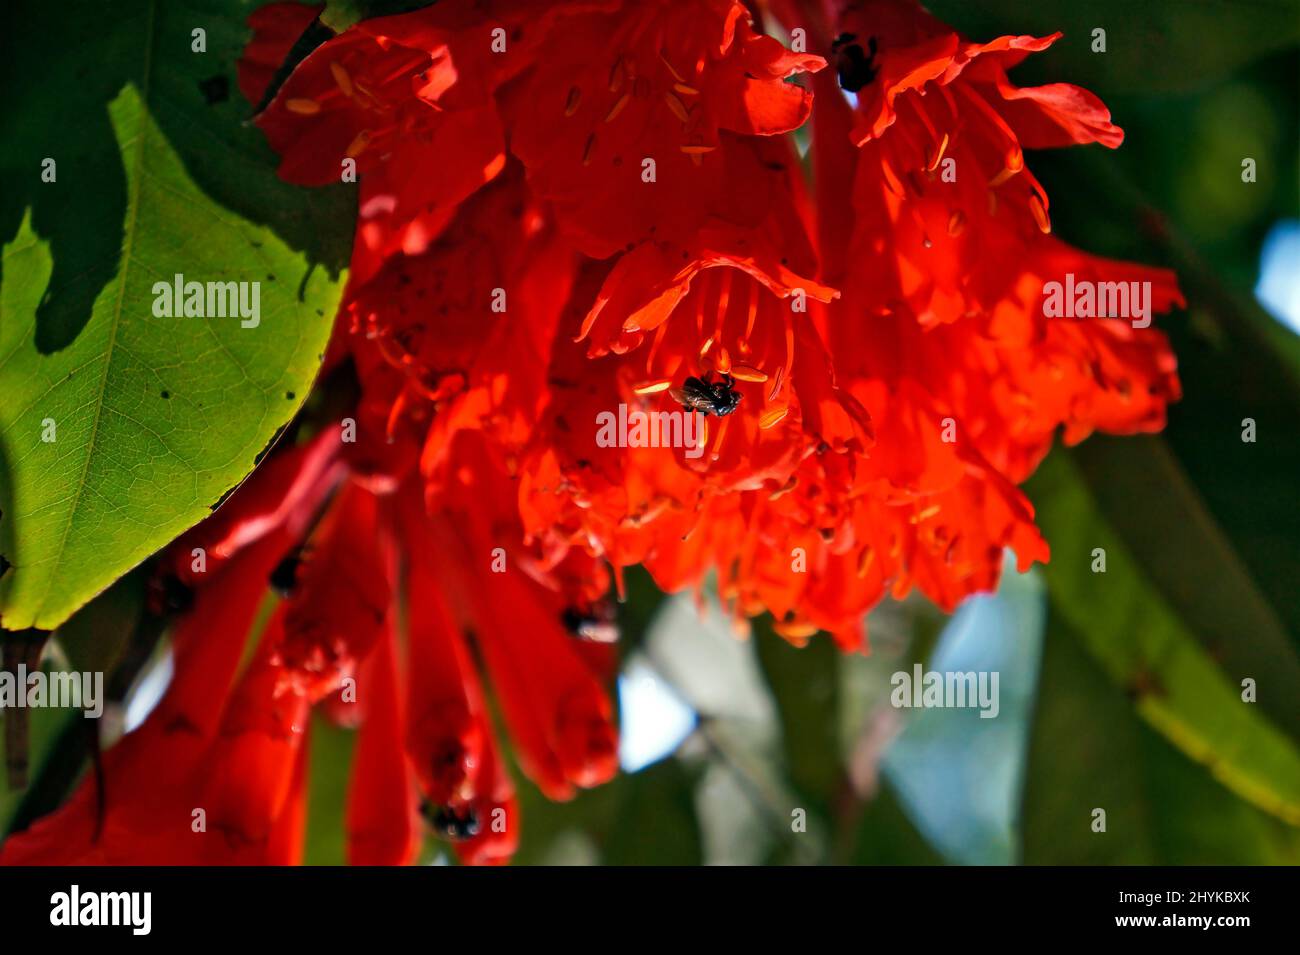 Scarlet flame bean flowers or mountain rose flowers (Brownea grandiceps) Stock Photo